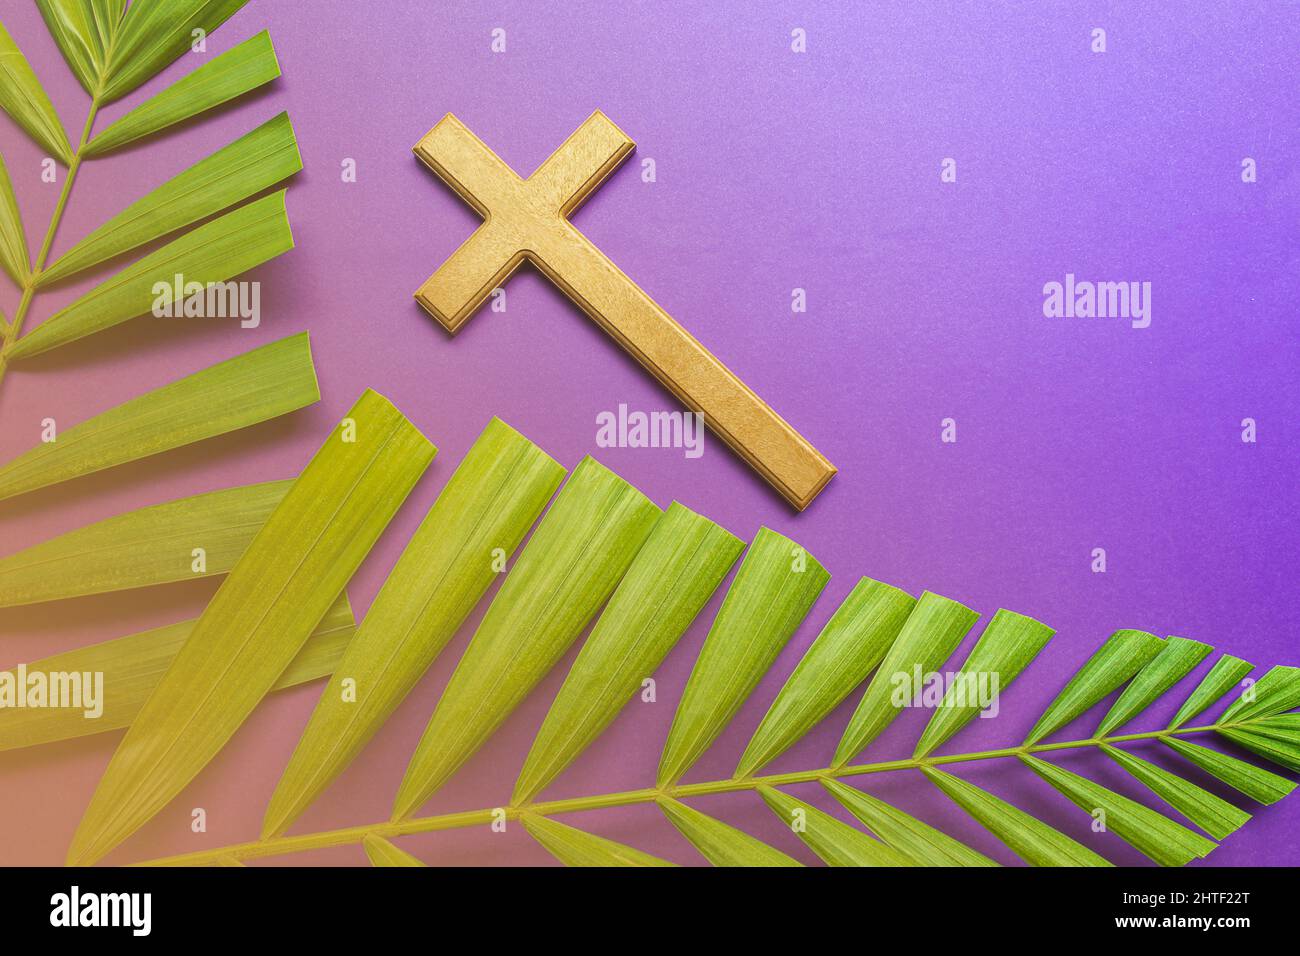 Cruz y hojas de palma sobre fondo púrpura. Concepto de temporada de Cuaresma. Foto de stock